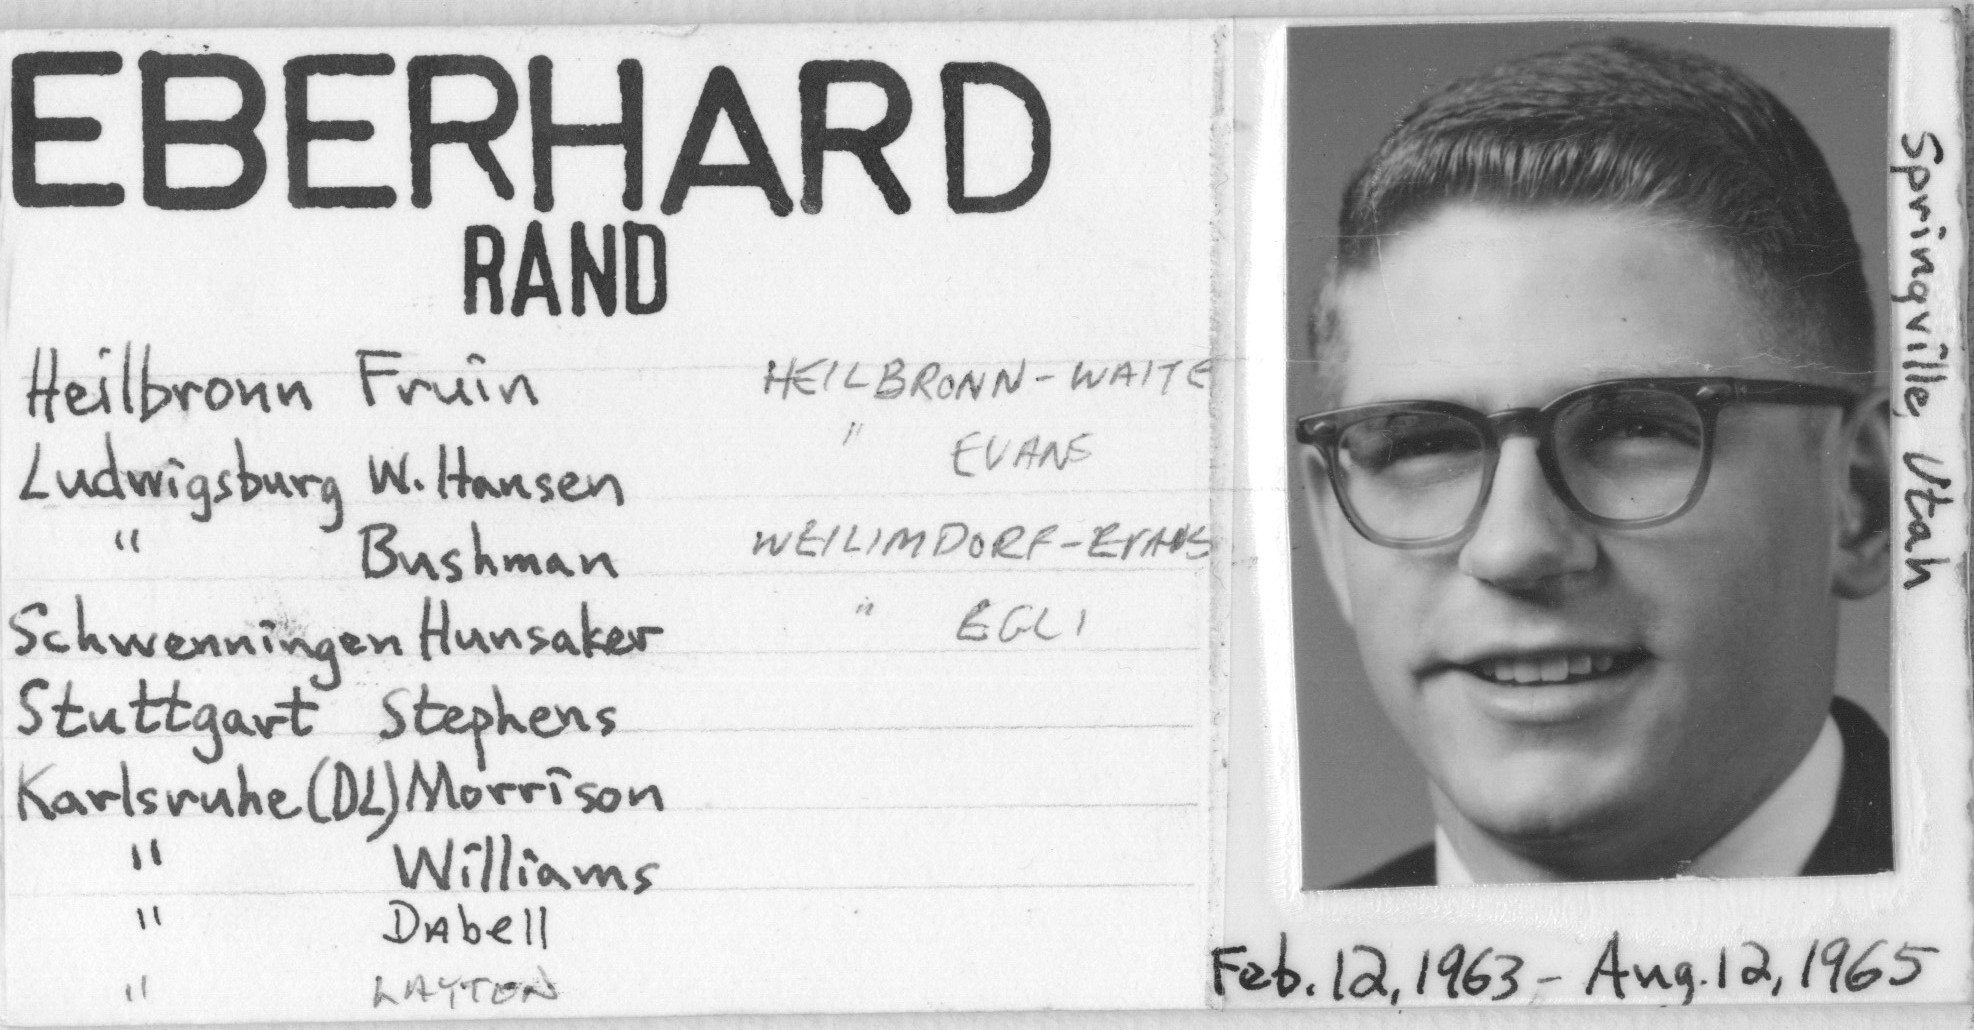 Eberhard, Rand